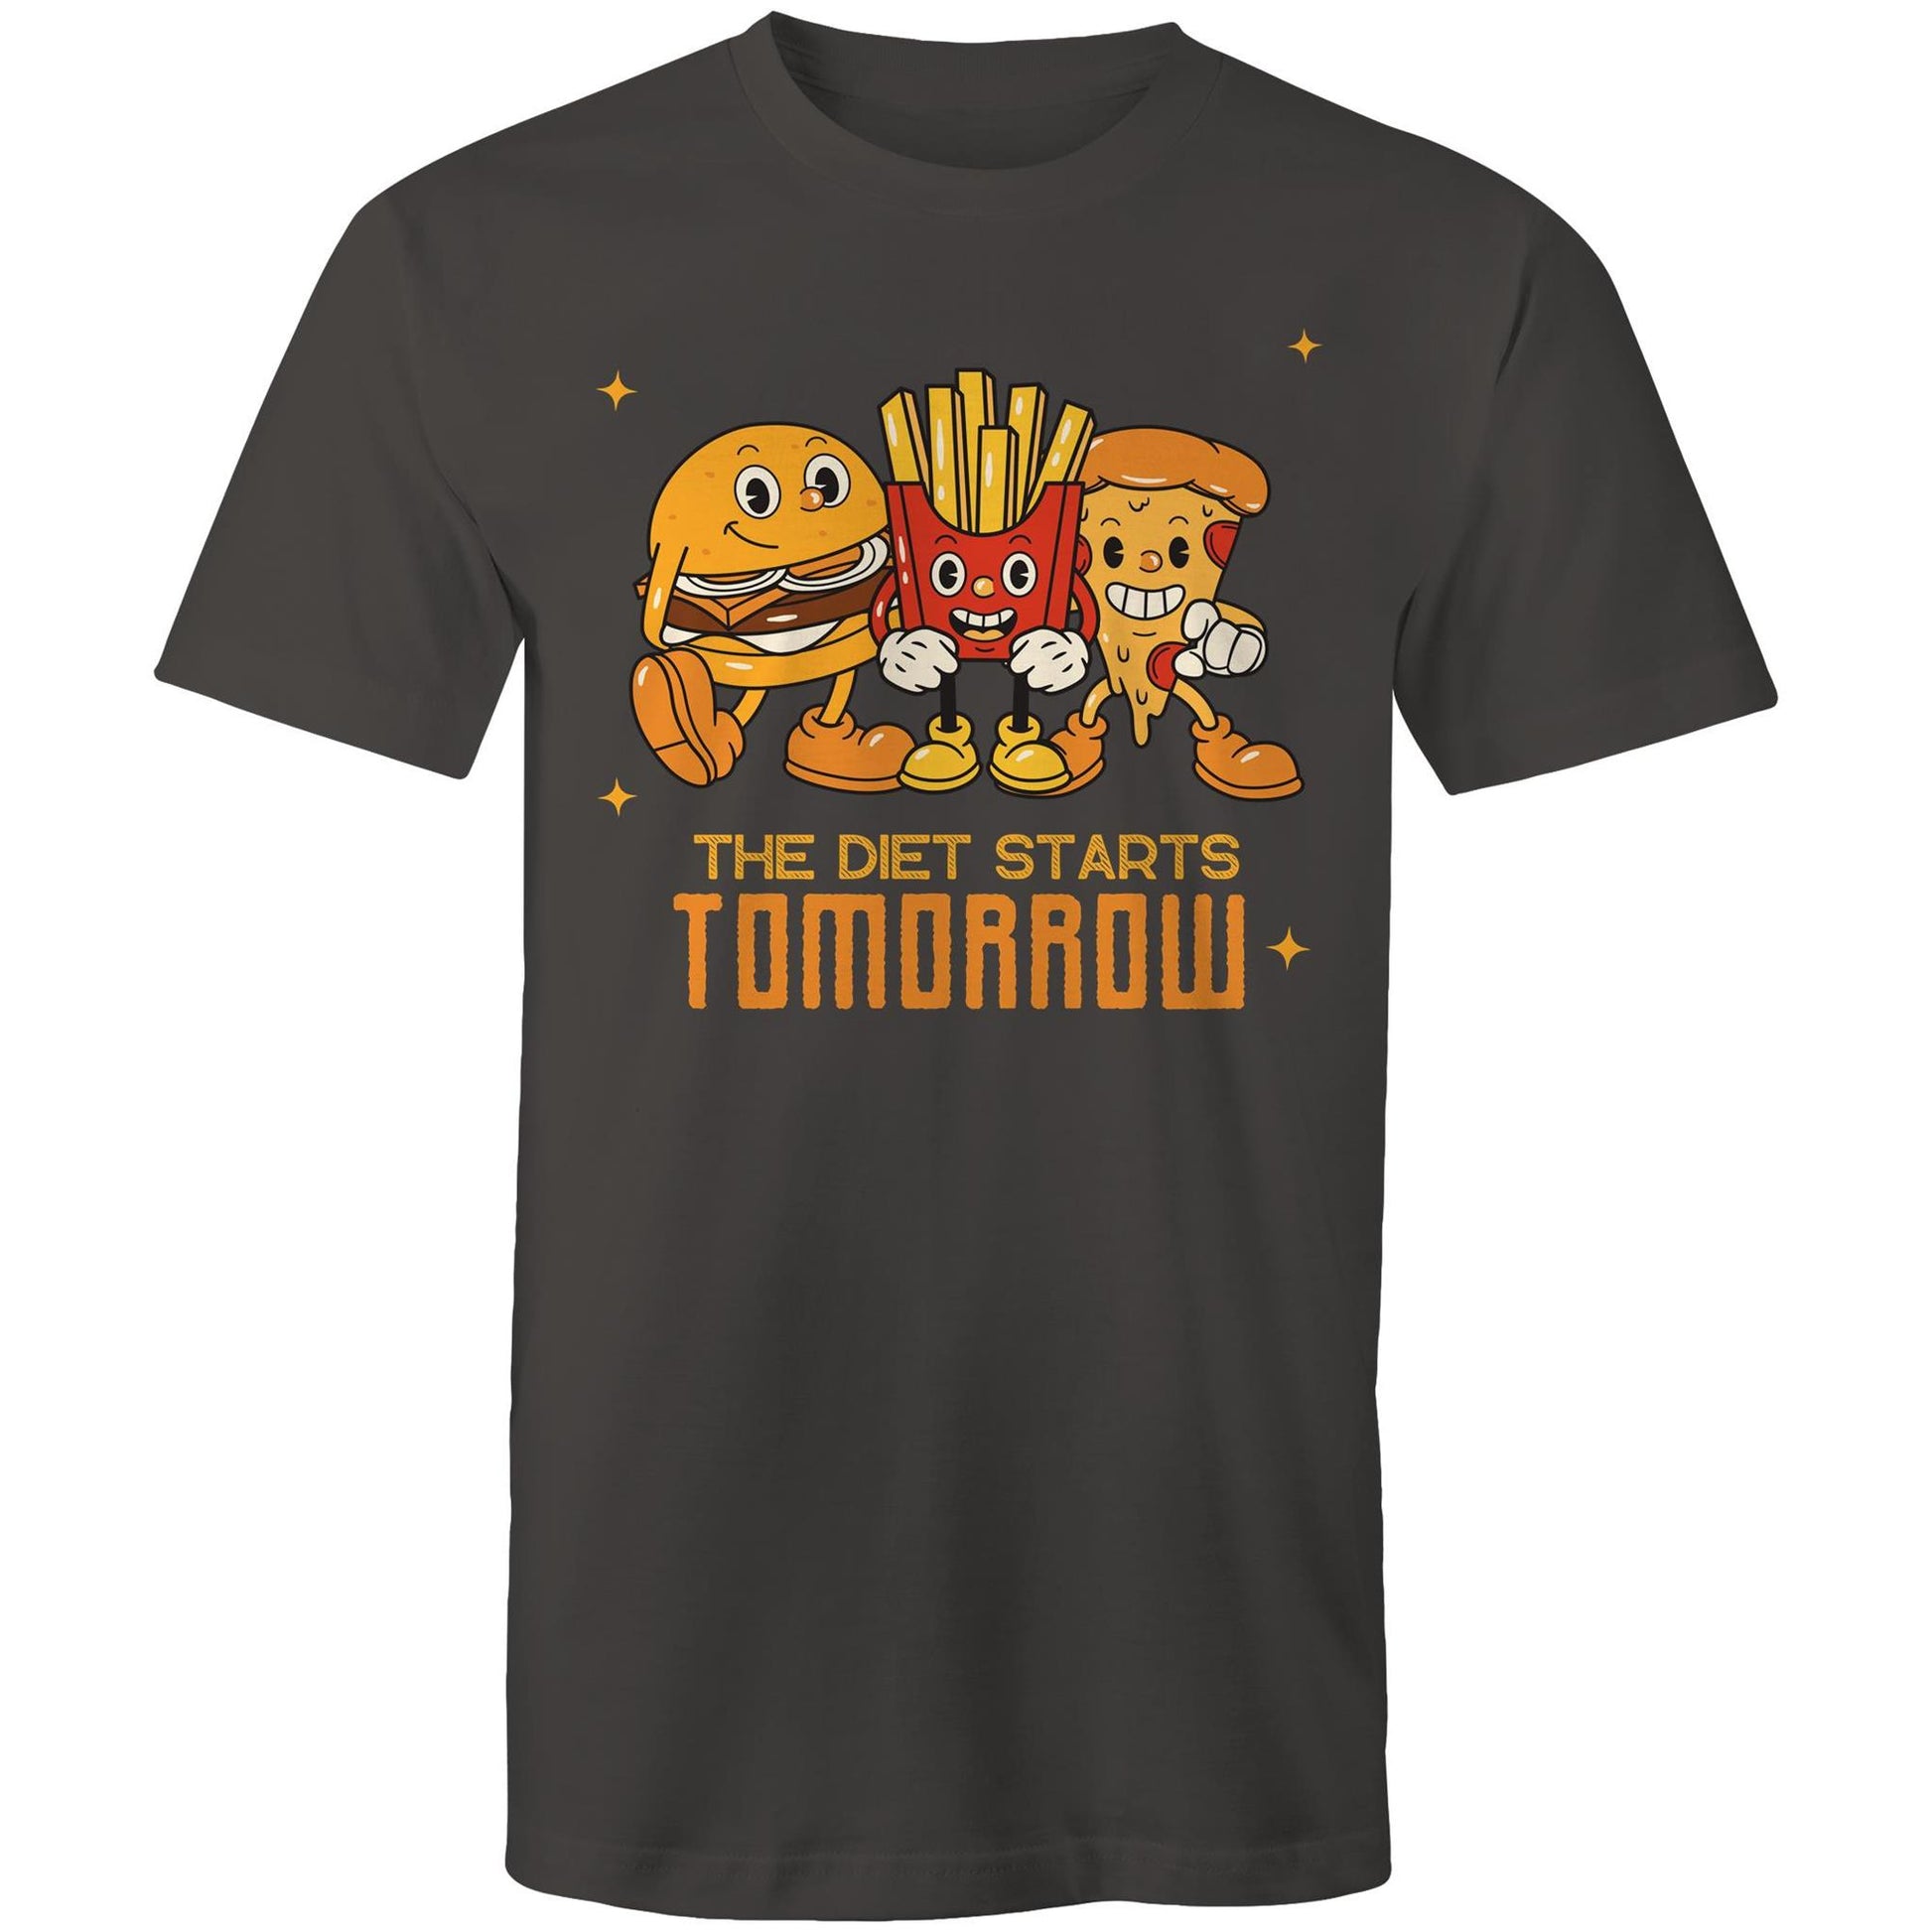 The Diet Starts Tomorrow, Hamburger, Pizza, Fries - Mens T-Shirt Charcoal Mens T-shirt Food Funny Retro